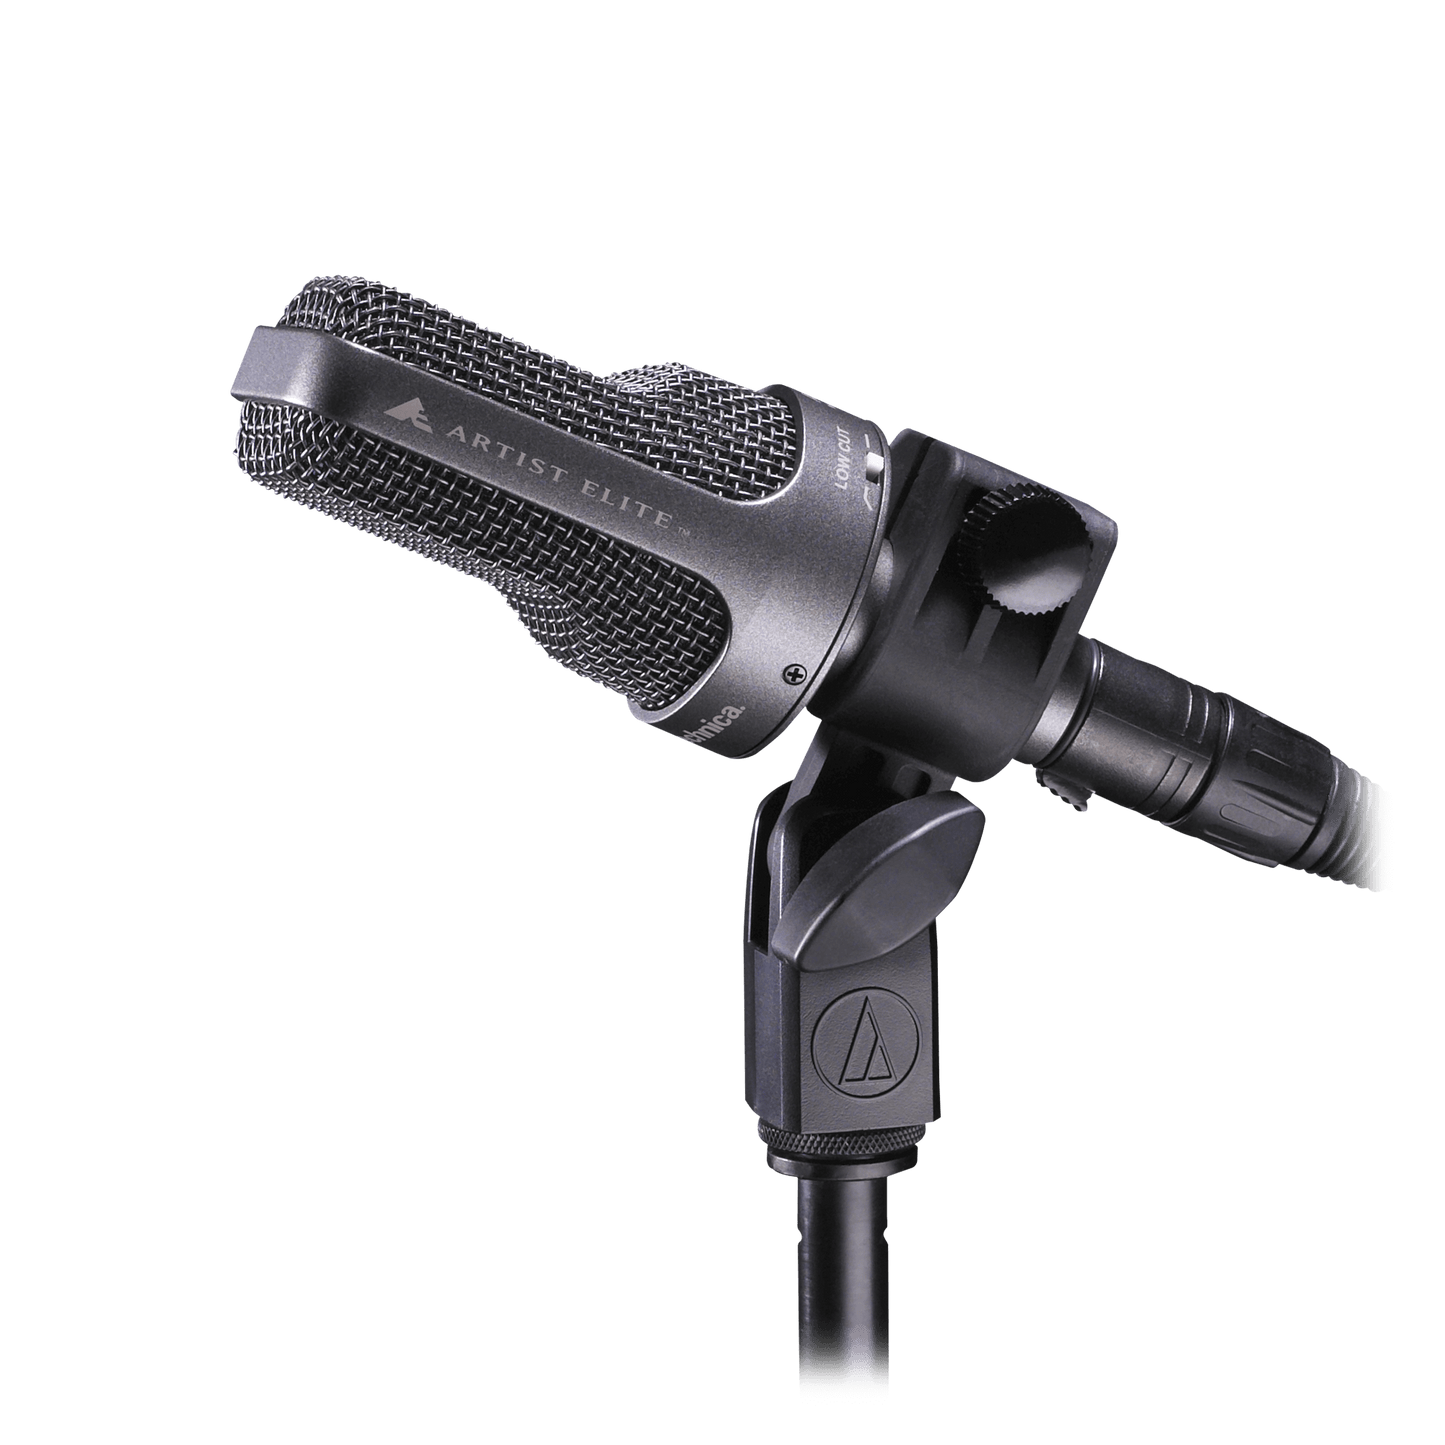 Audio Technica AE3000 Cardioid Condenser Instrument Microphone